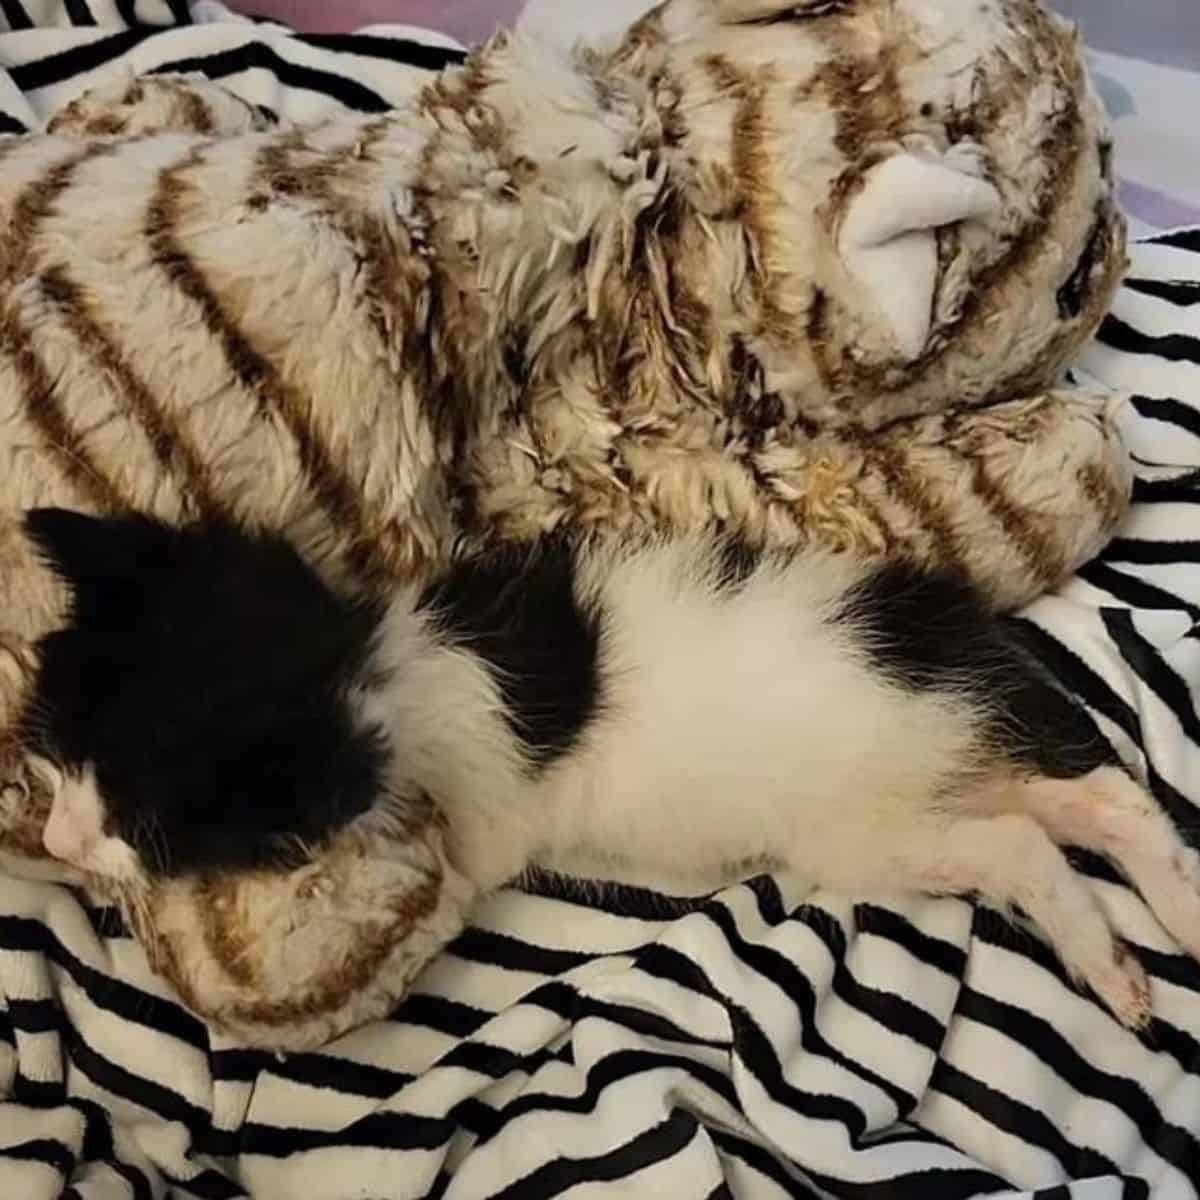 kitten lying next to a stuffed animal